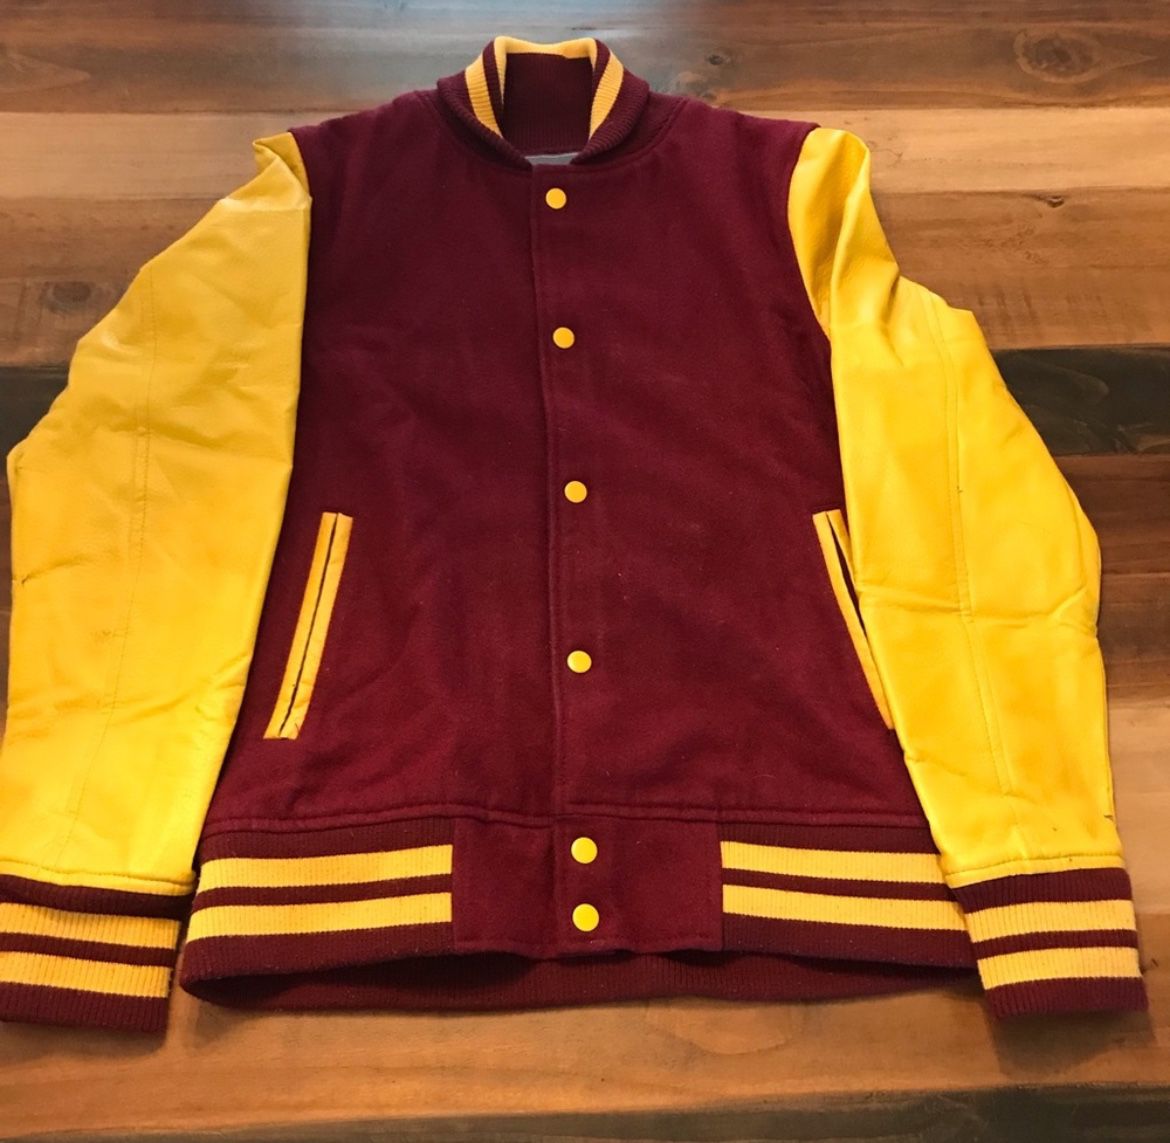 YSL style Varsity jacket (see photos)